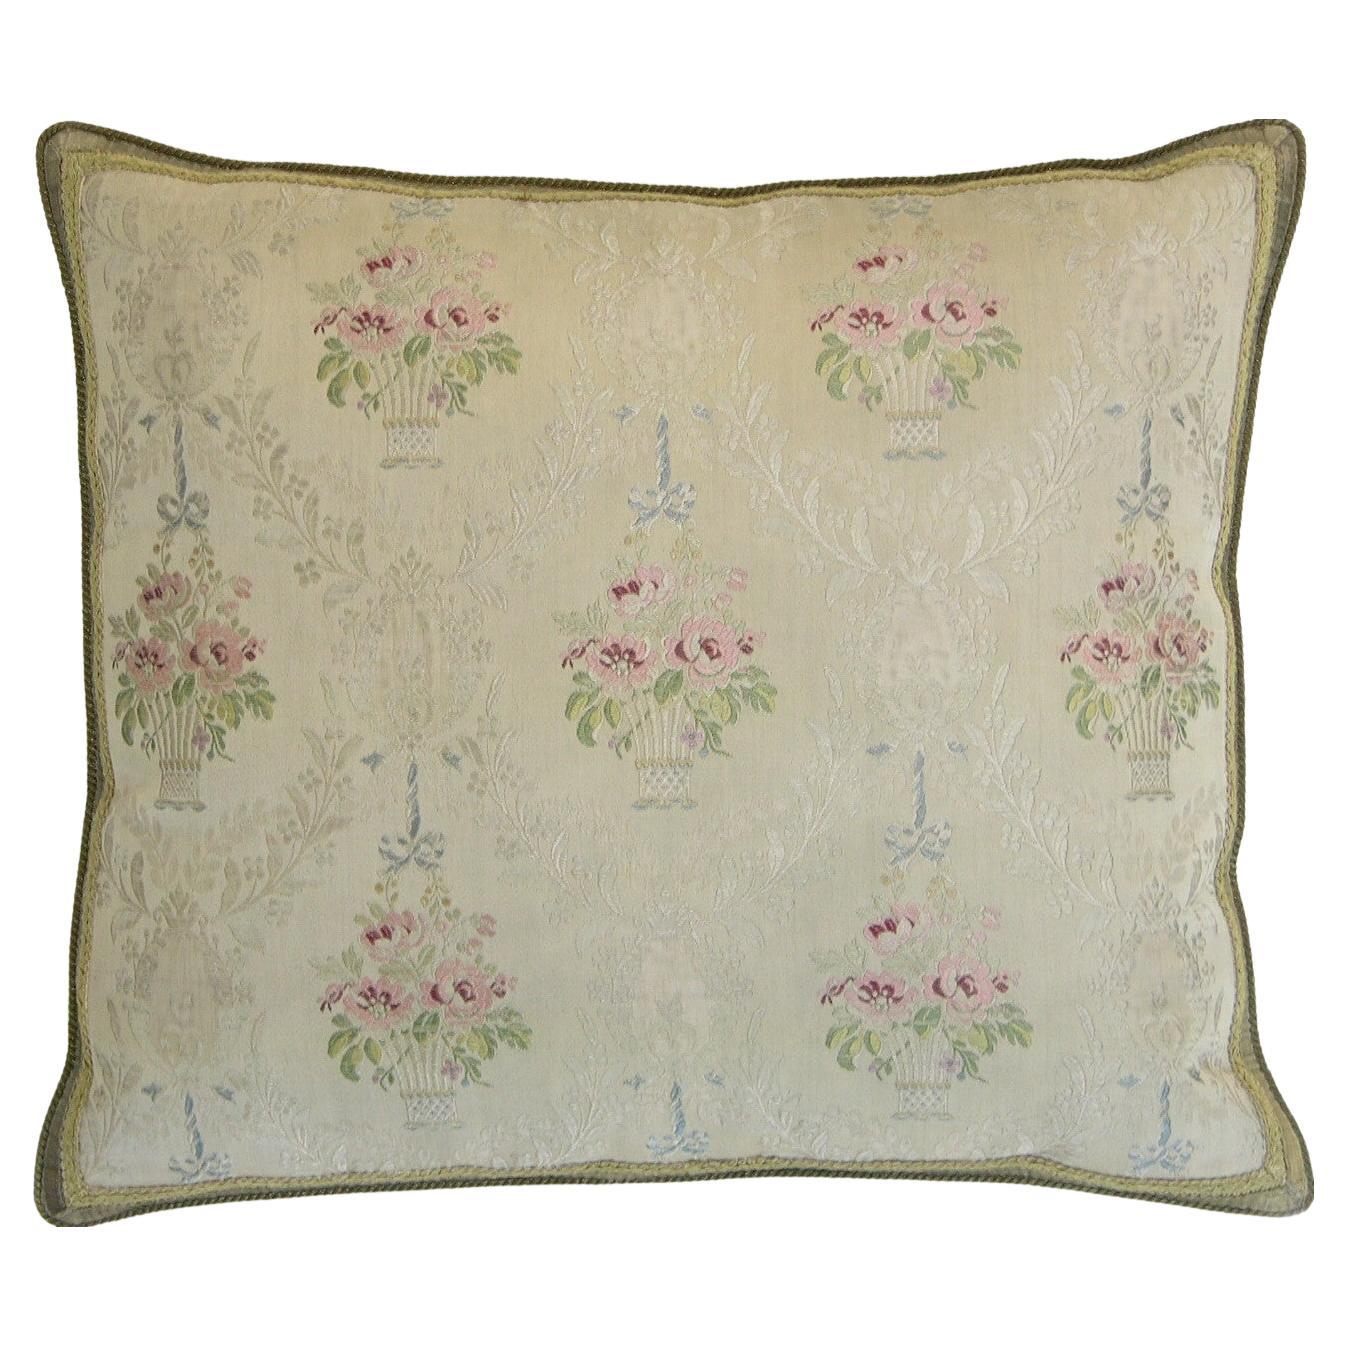 Circa 1860 Antique French Textile Pillow For Sale